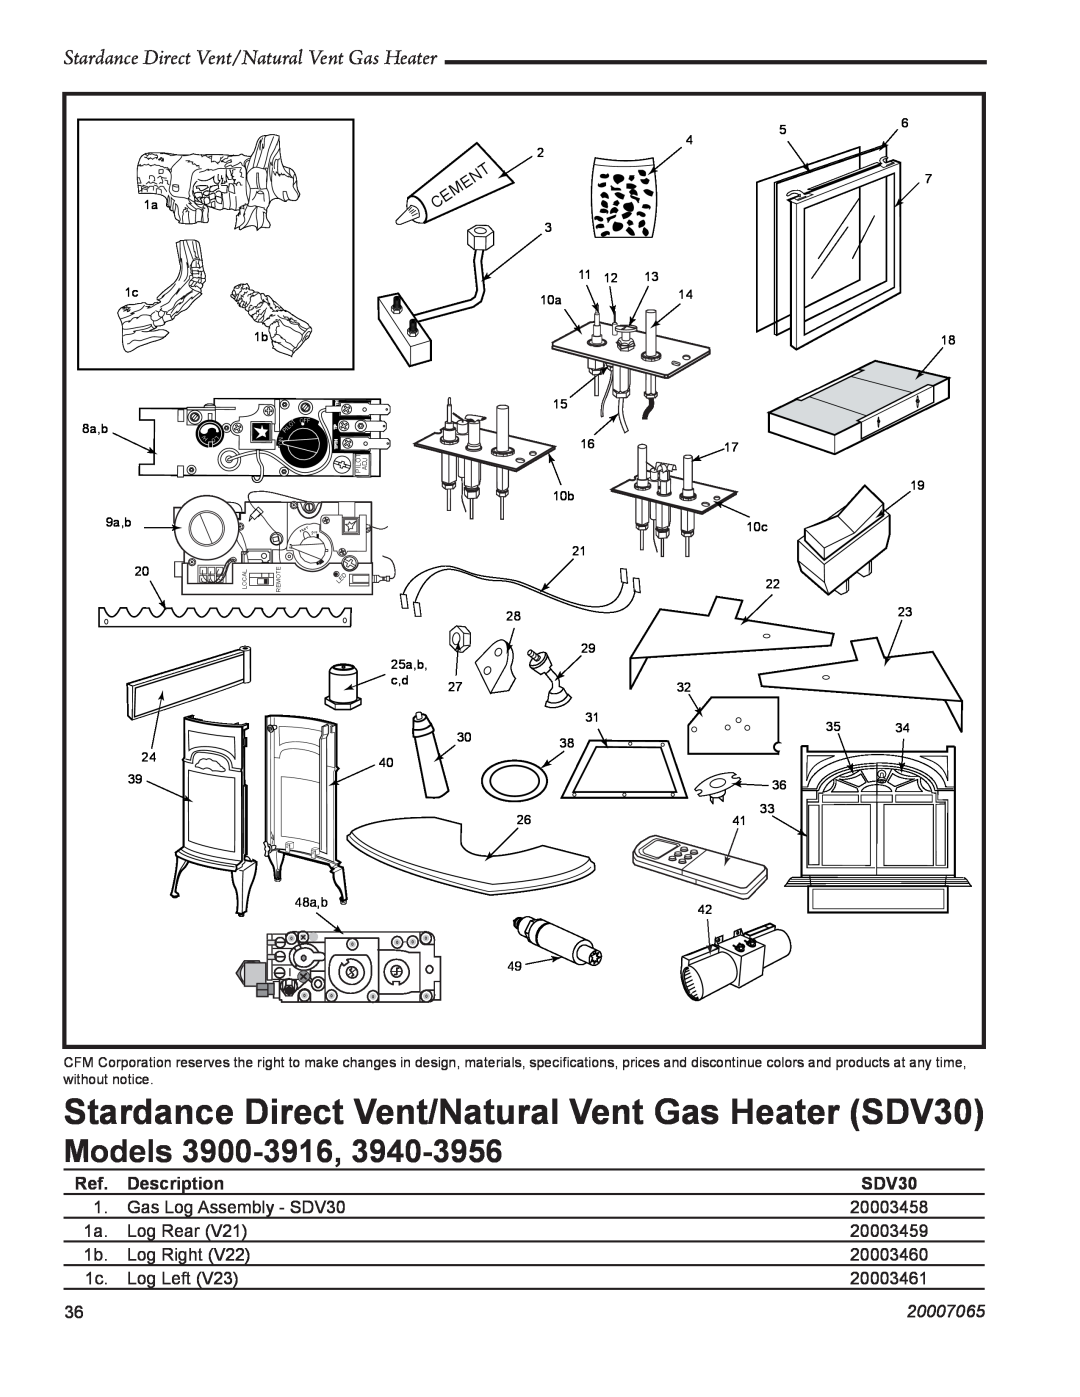 Vermont Casting SDV30 manual Models, Stardance Direct Vent/Natural Vent Gas Heater, Description, 20007065 